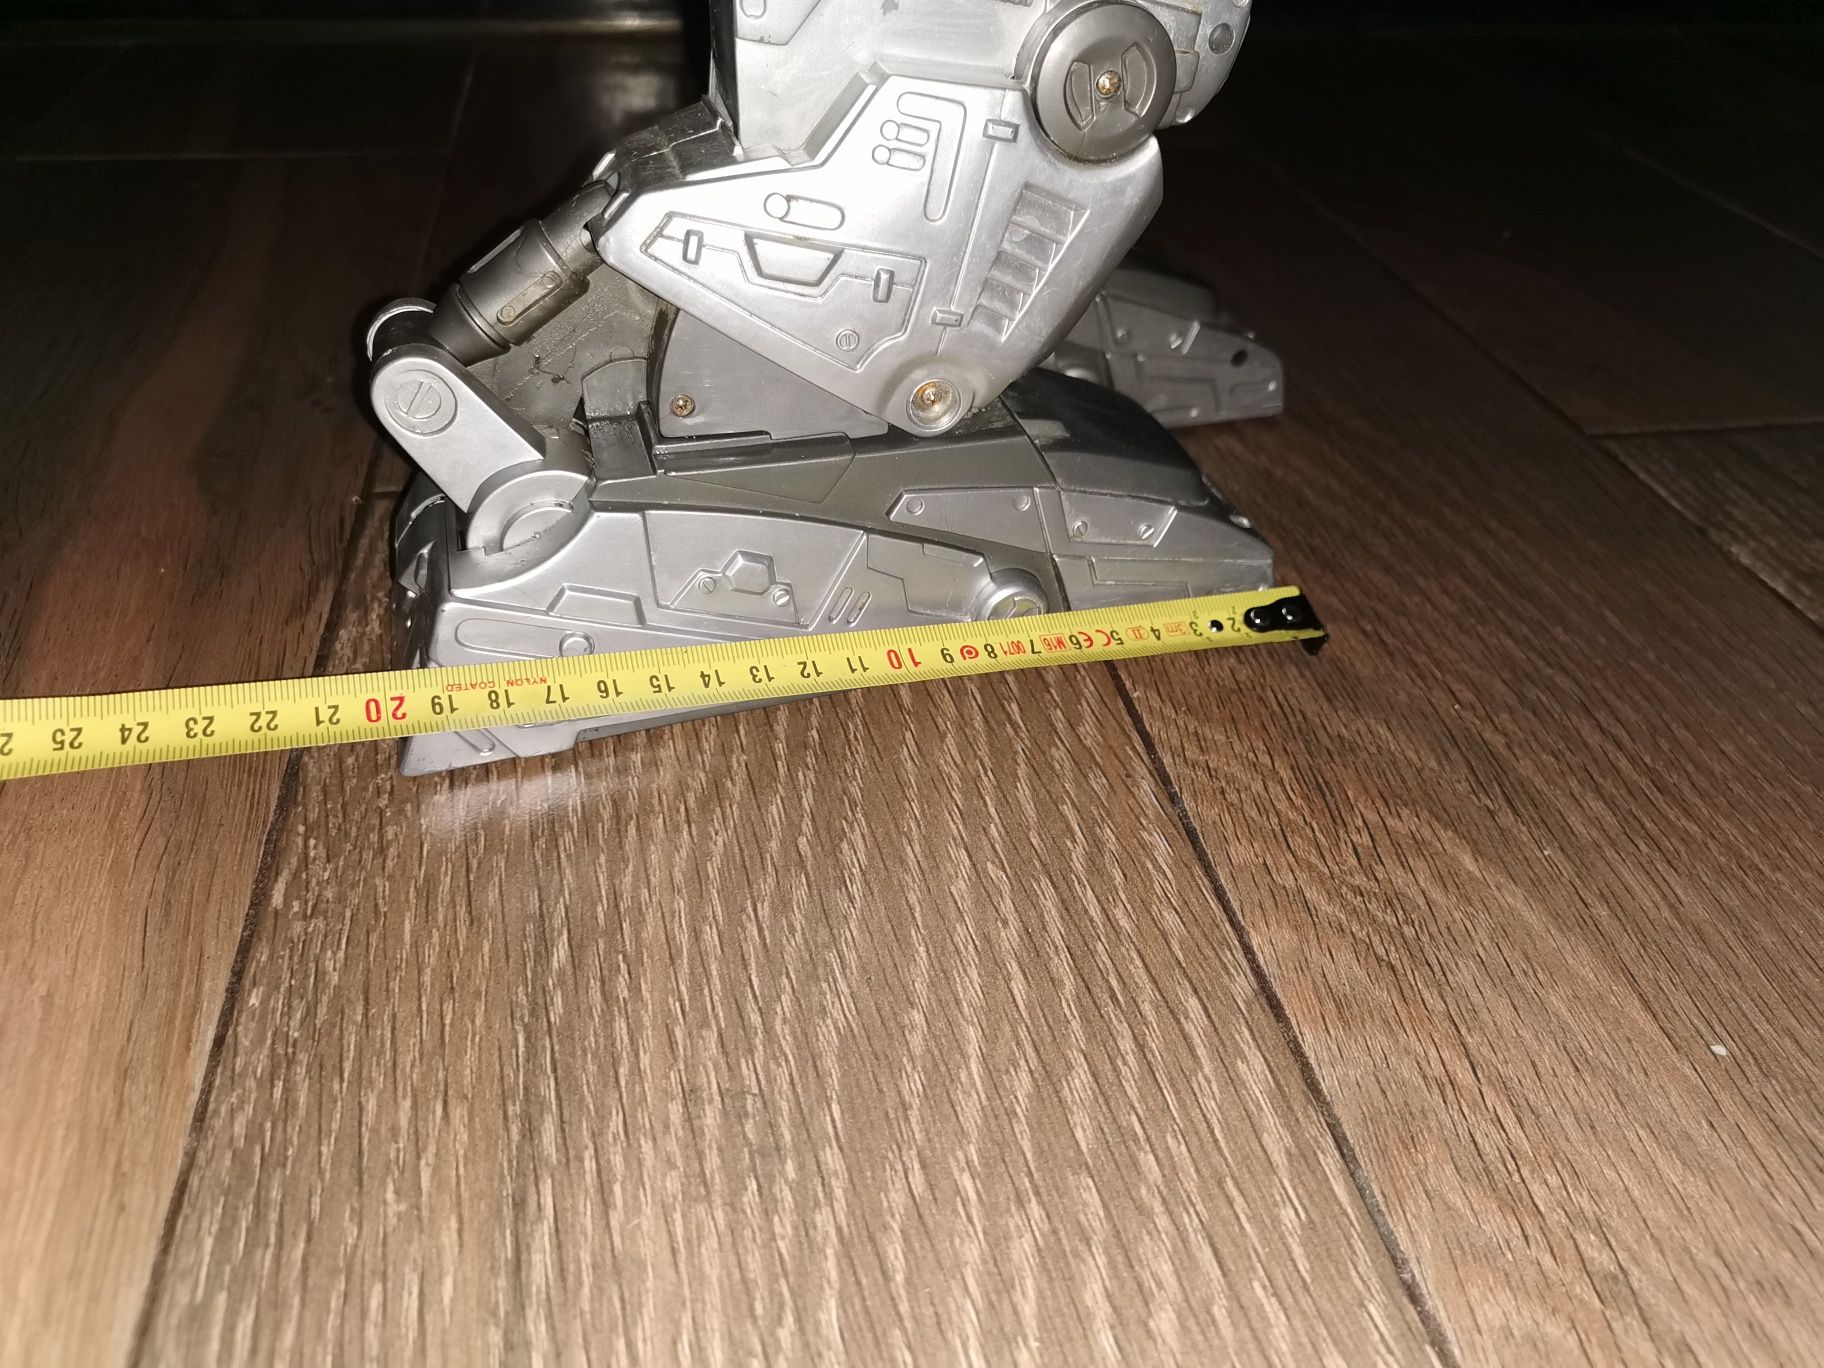 Planet fighter zaptor robot simba na akumulator wielki